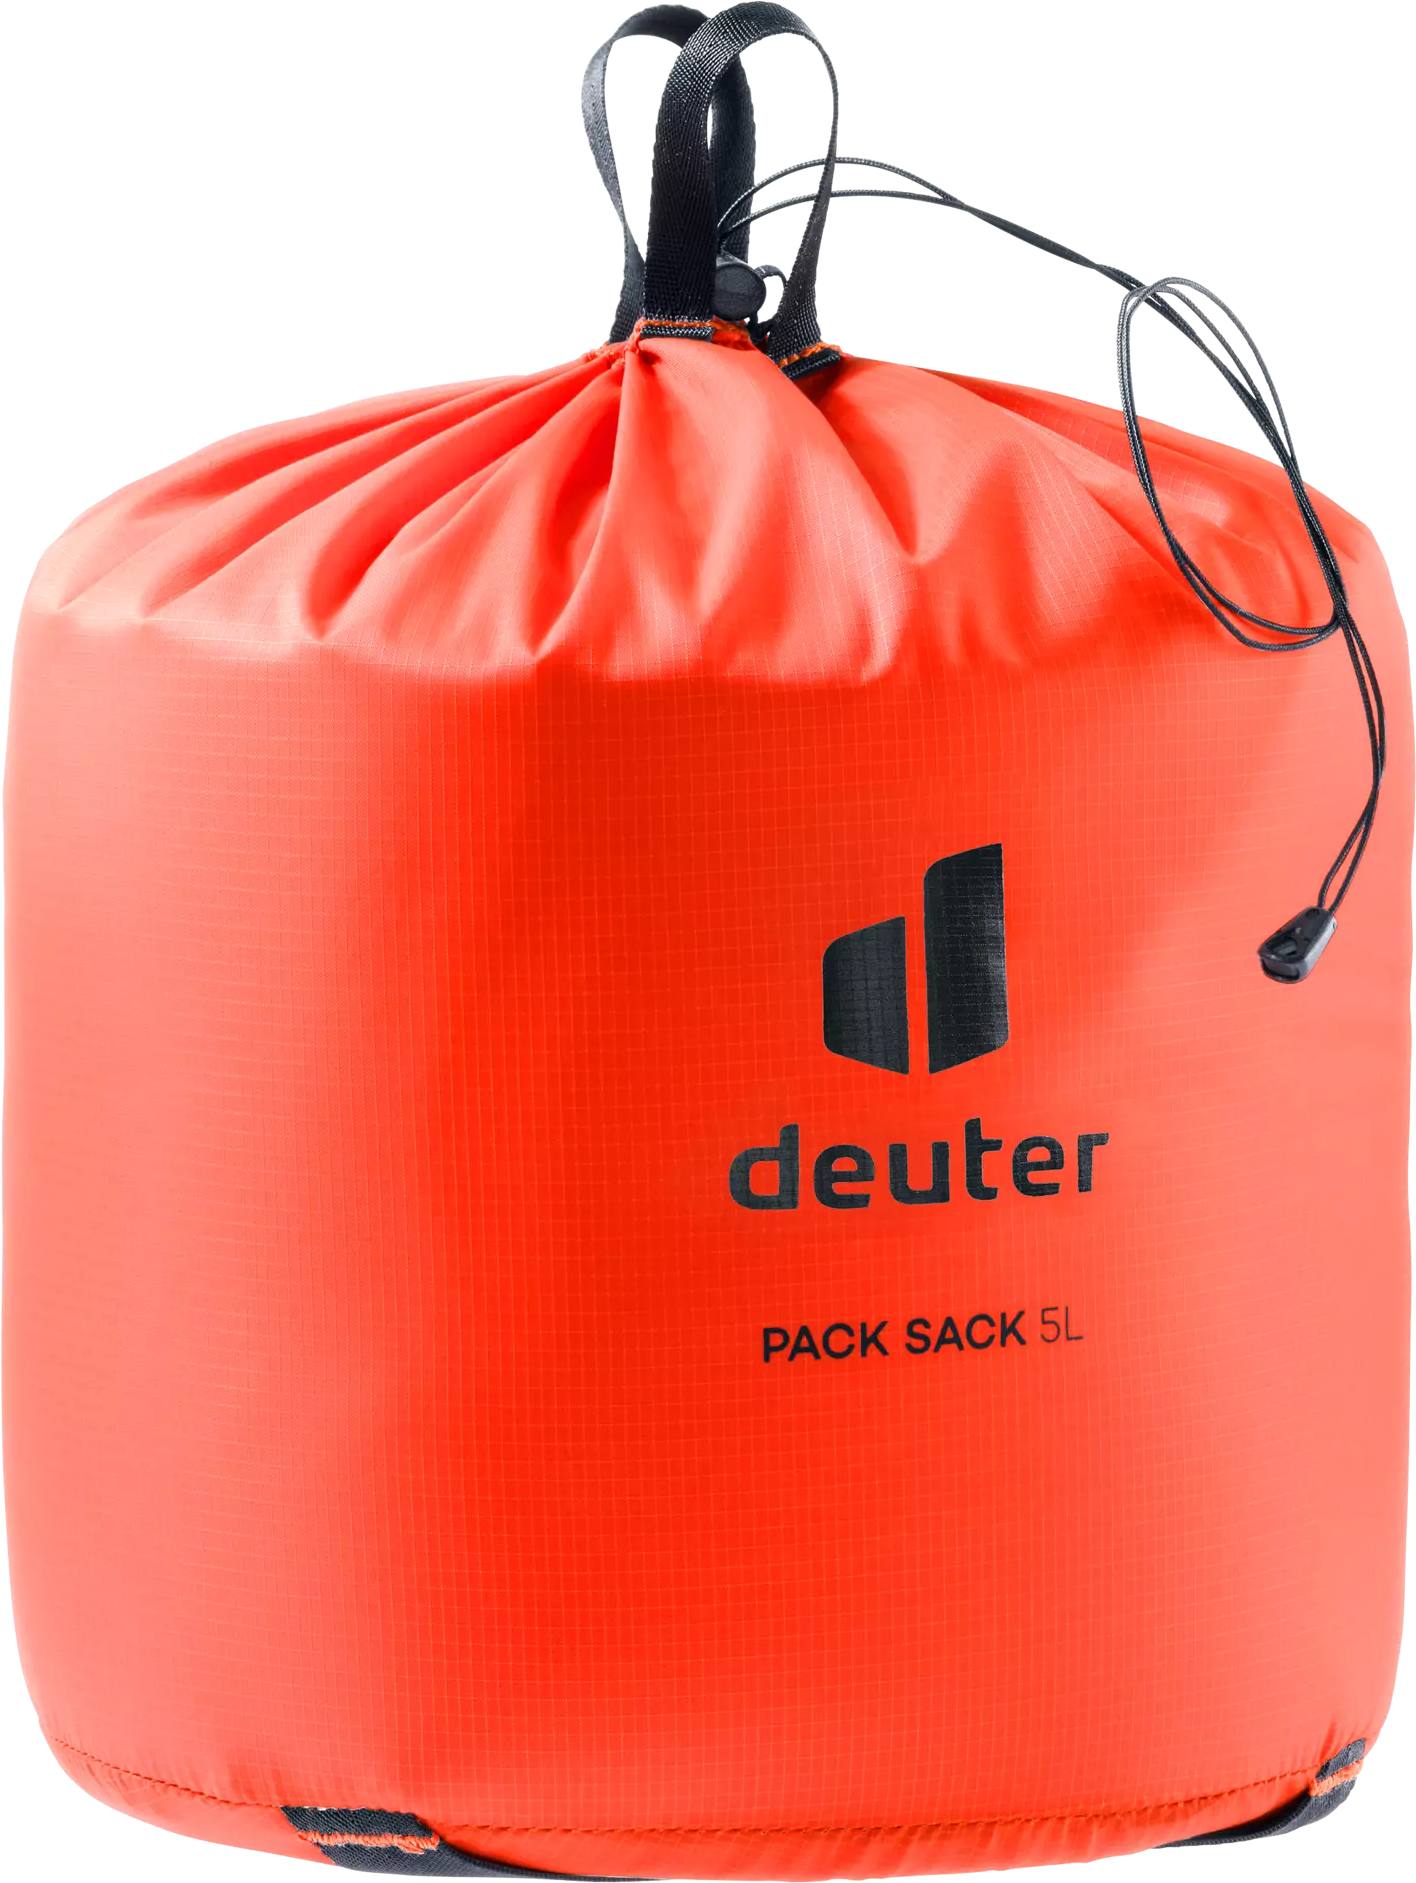 Image of Deuter Pack Sack 5